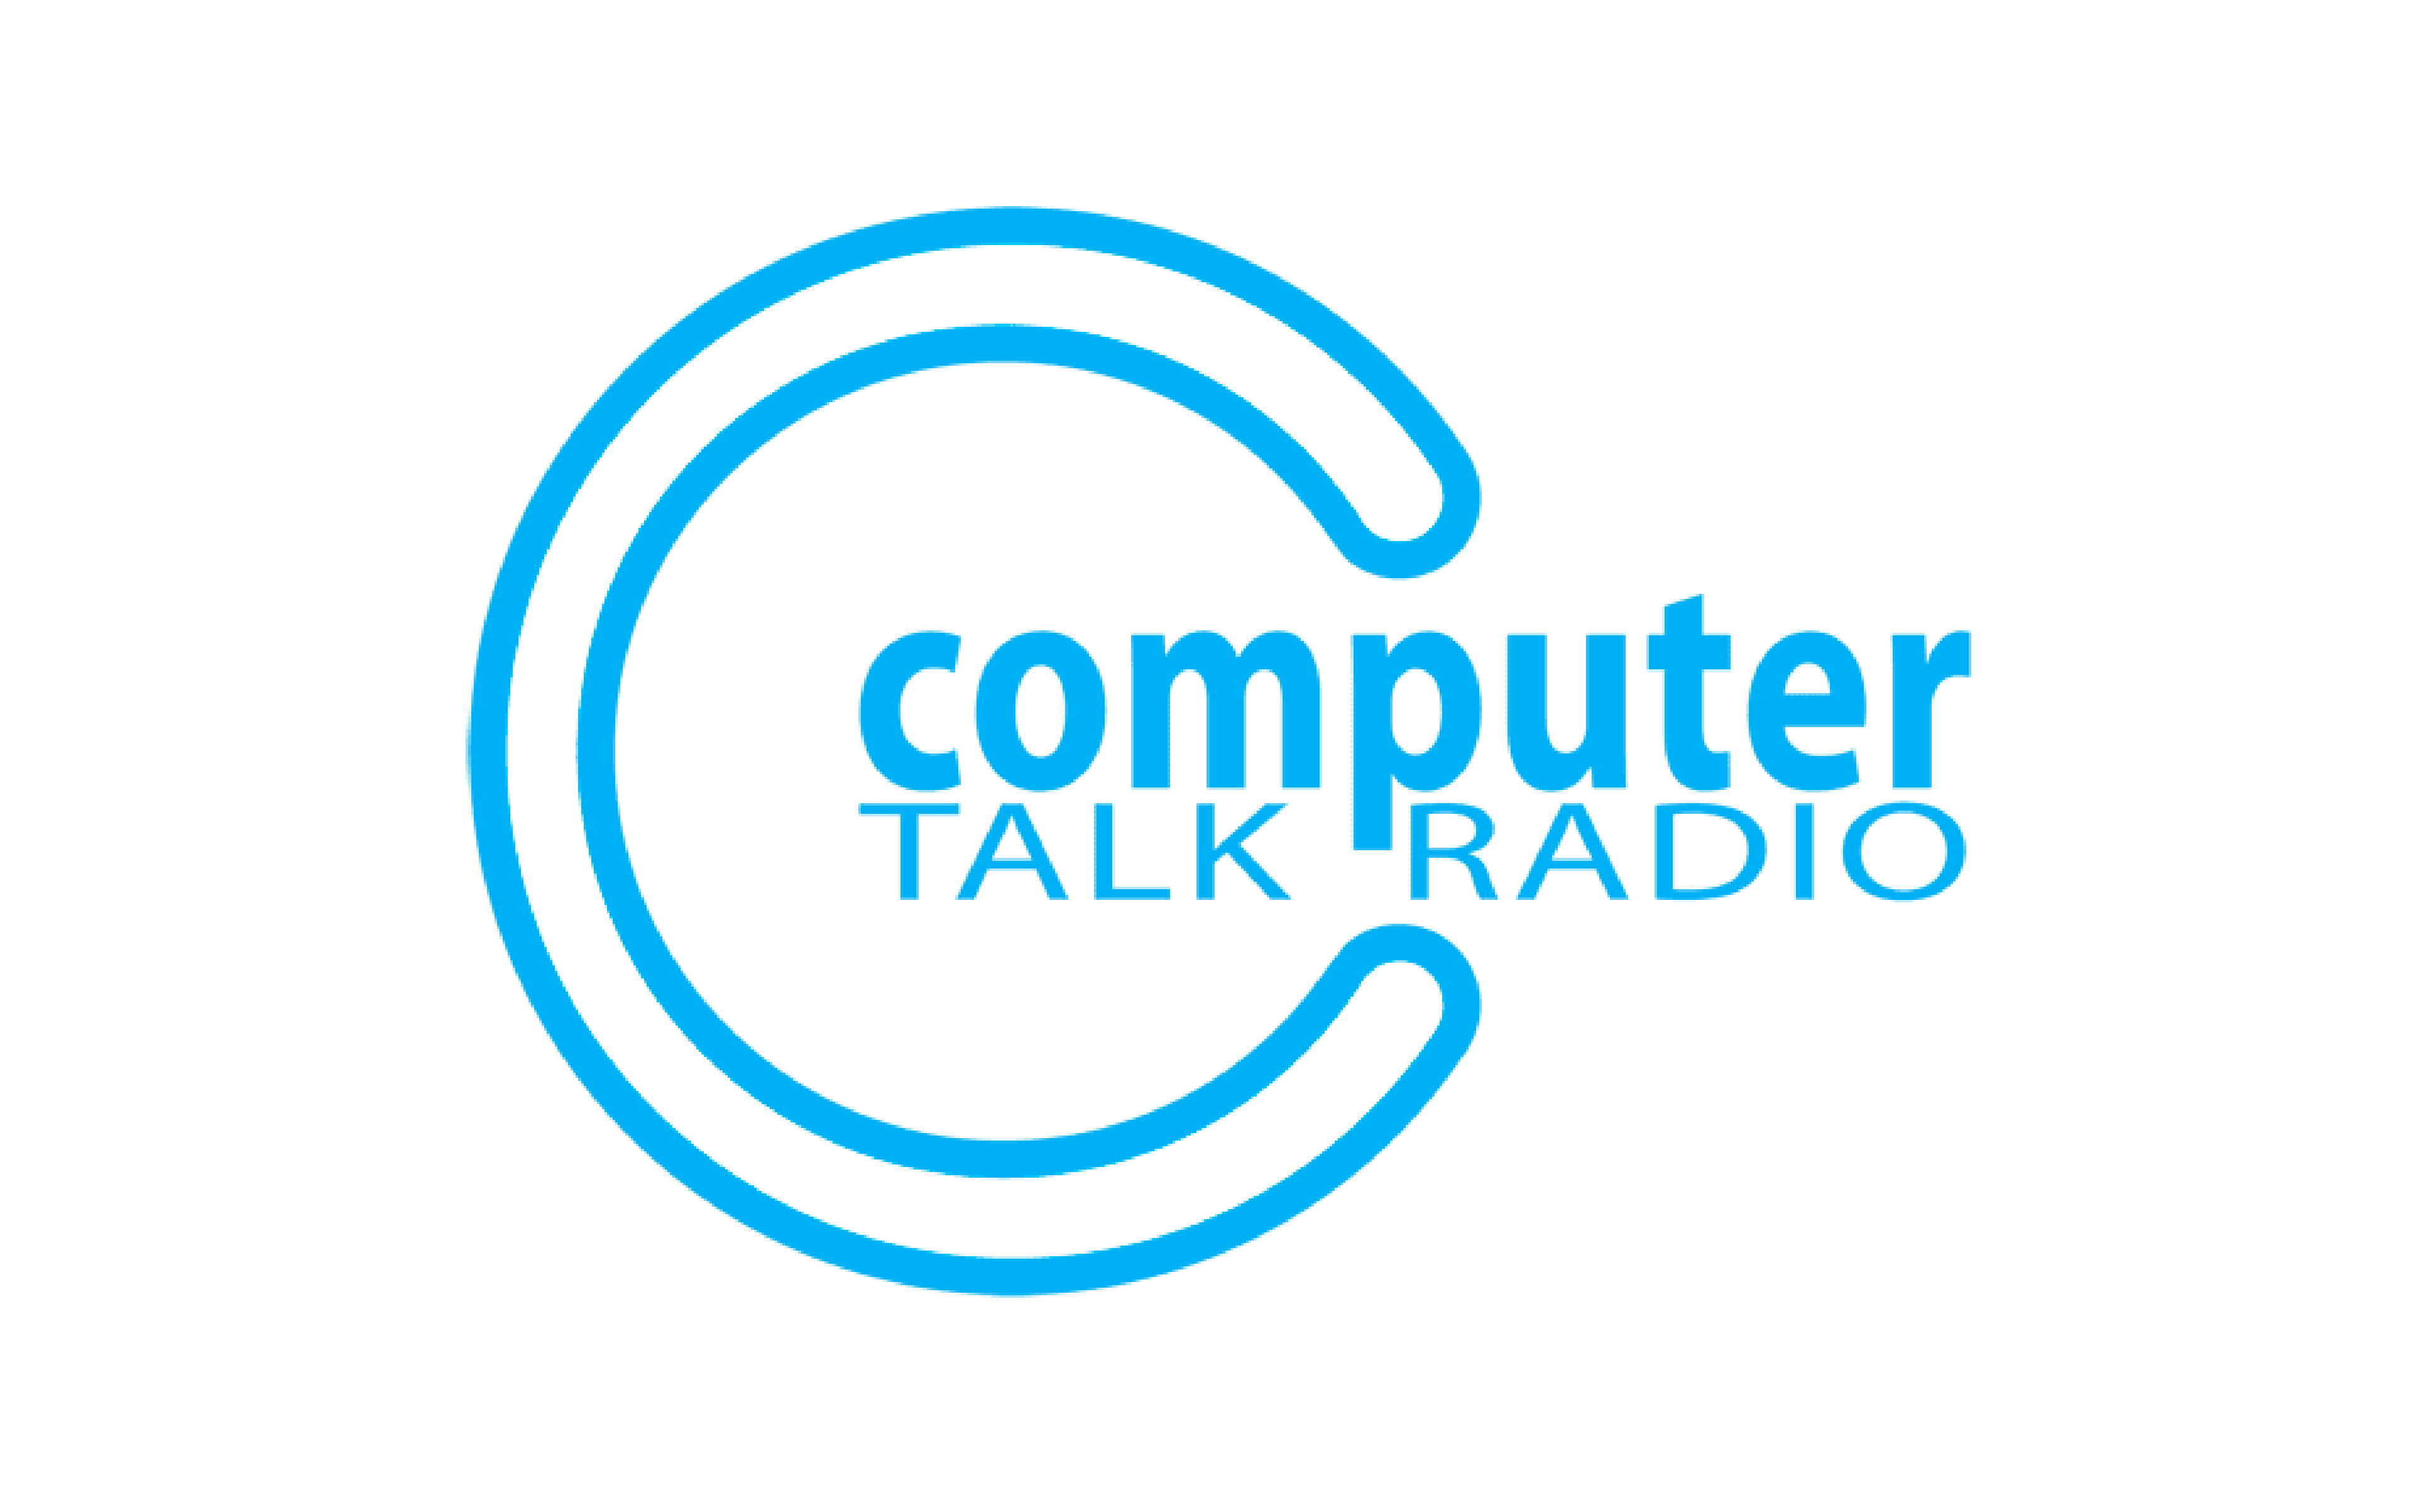 Listen to Computer Talk Radio Highlight Our Gas Alarms